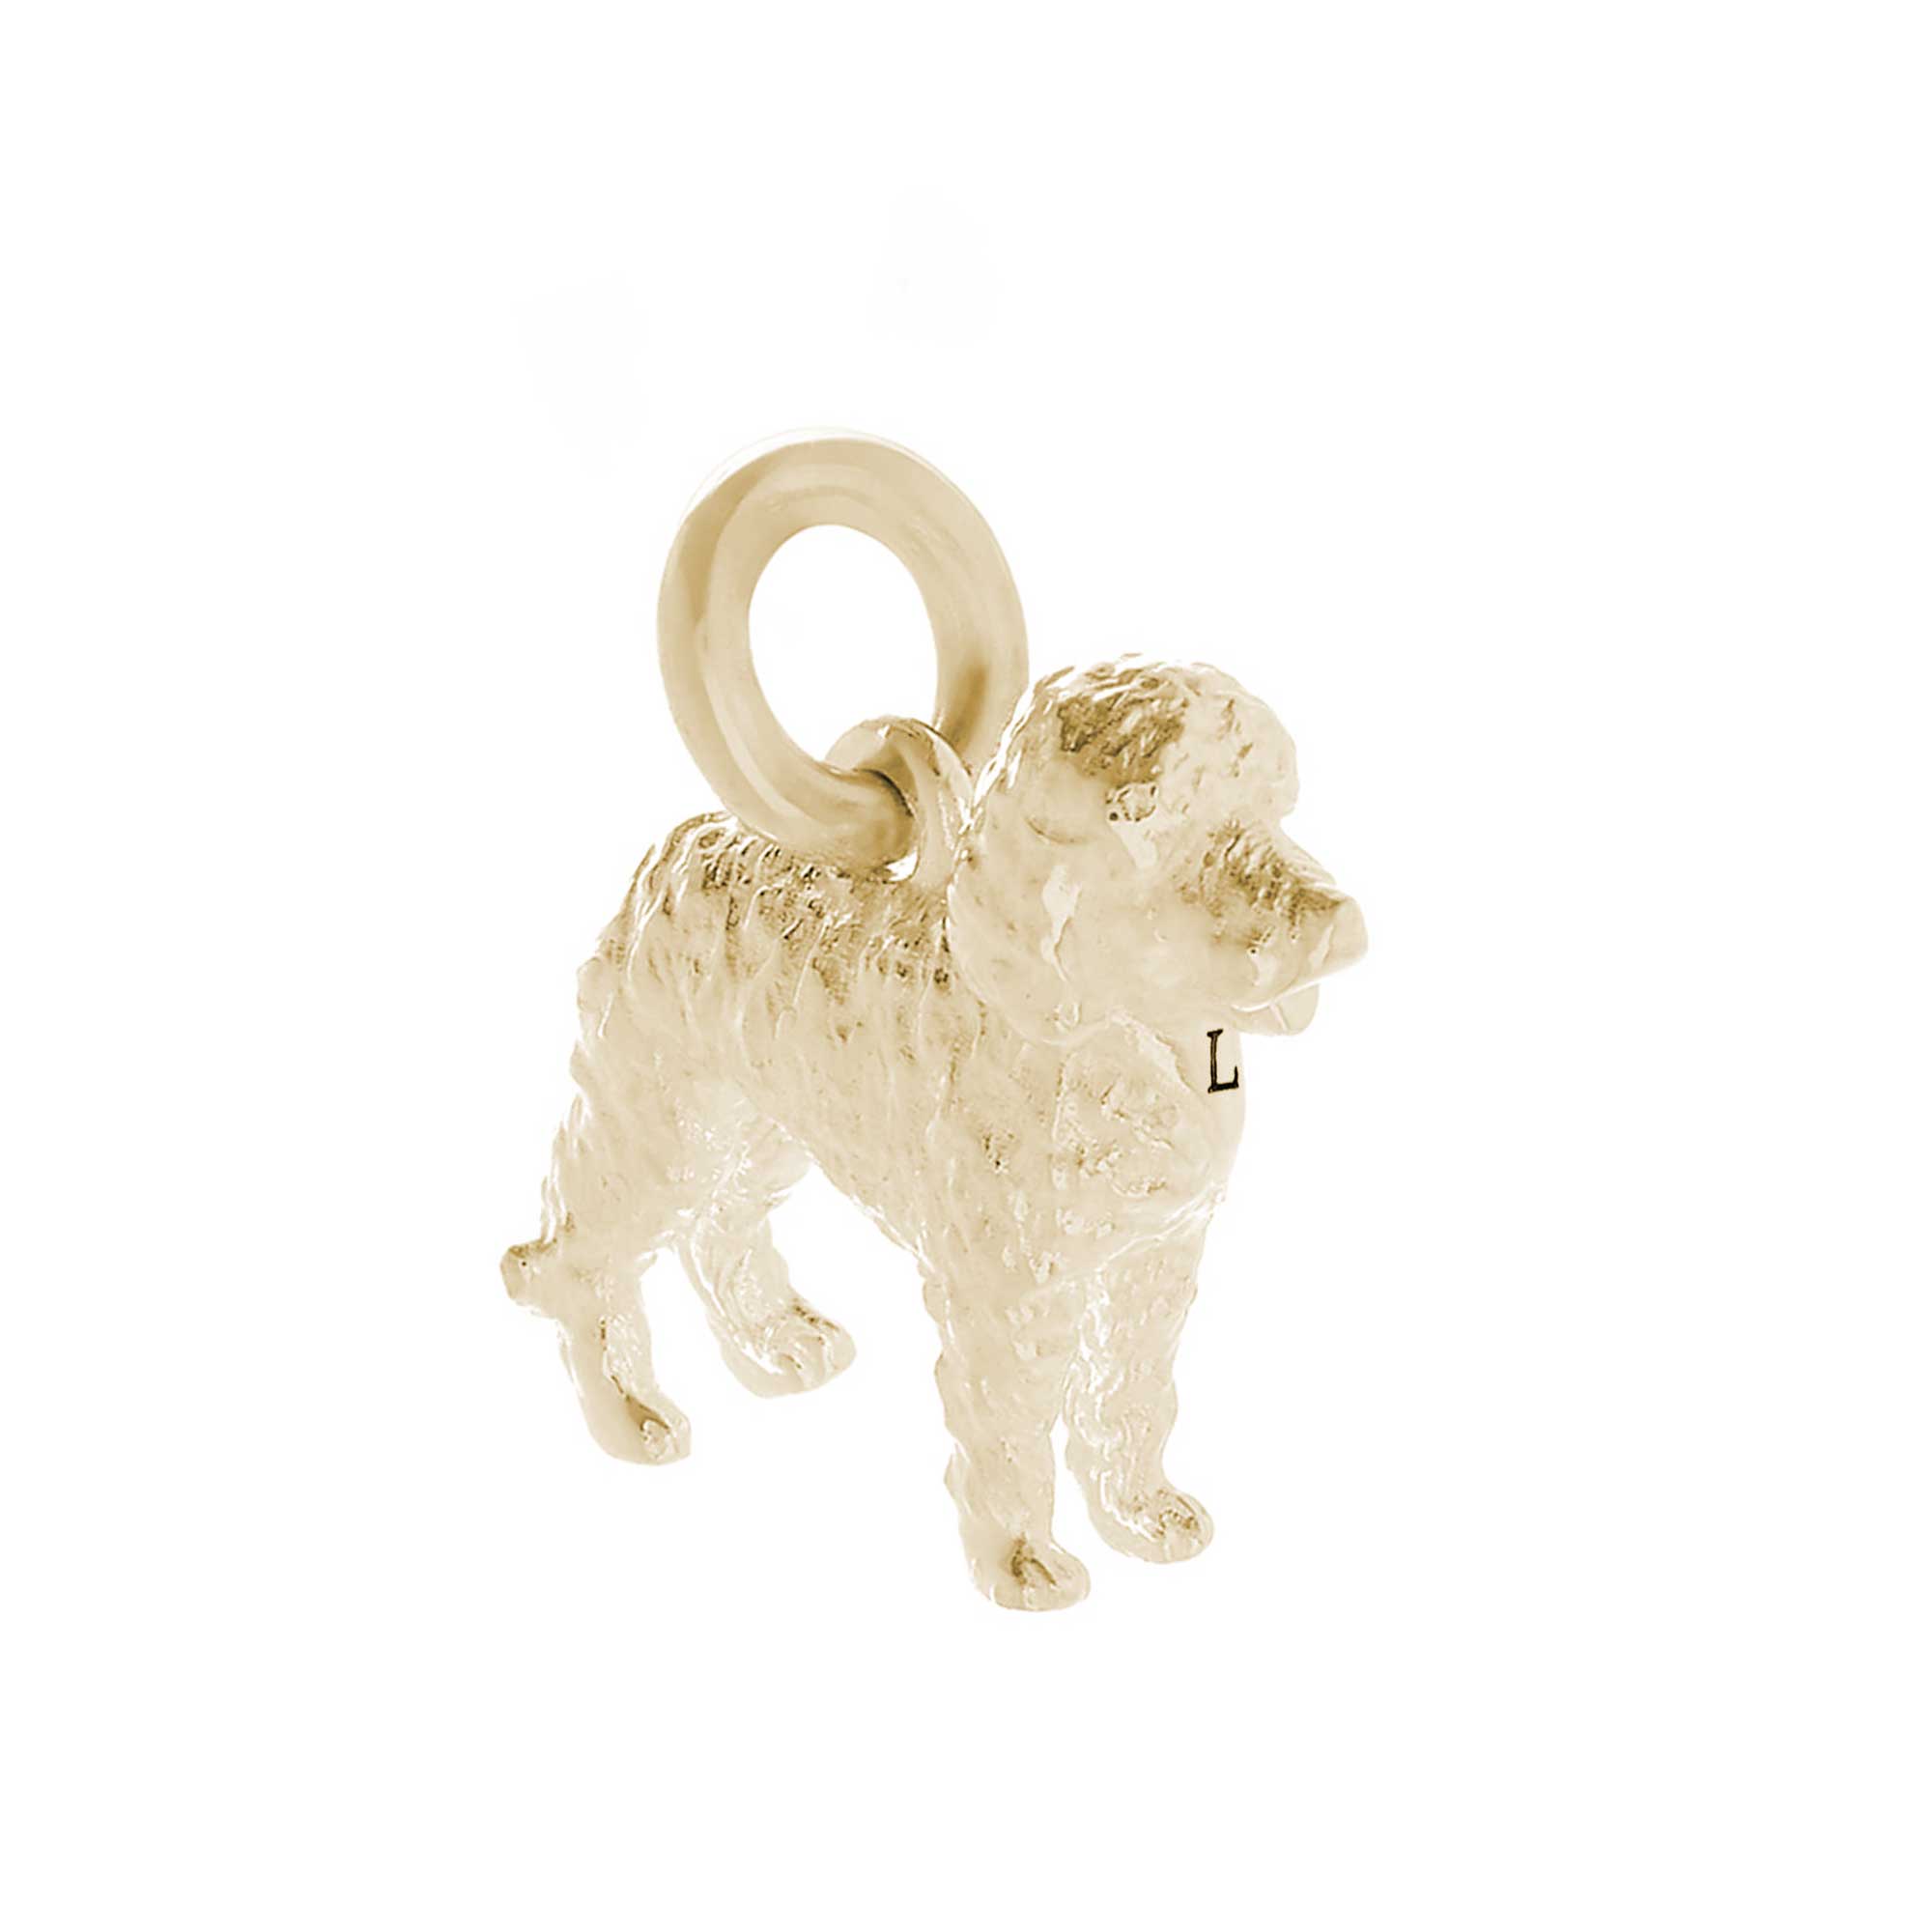 Solid gold labradoodle bracelet charm 9k 9ct gold dog charms scarlett jewellery